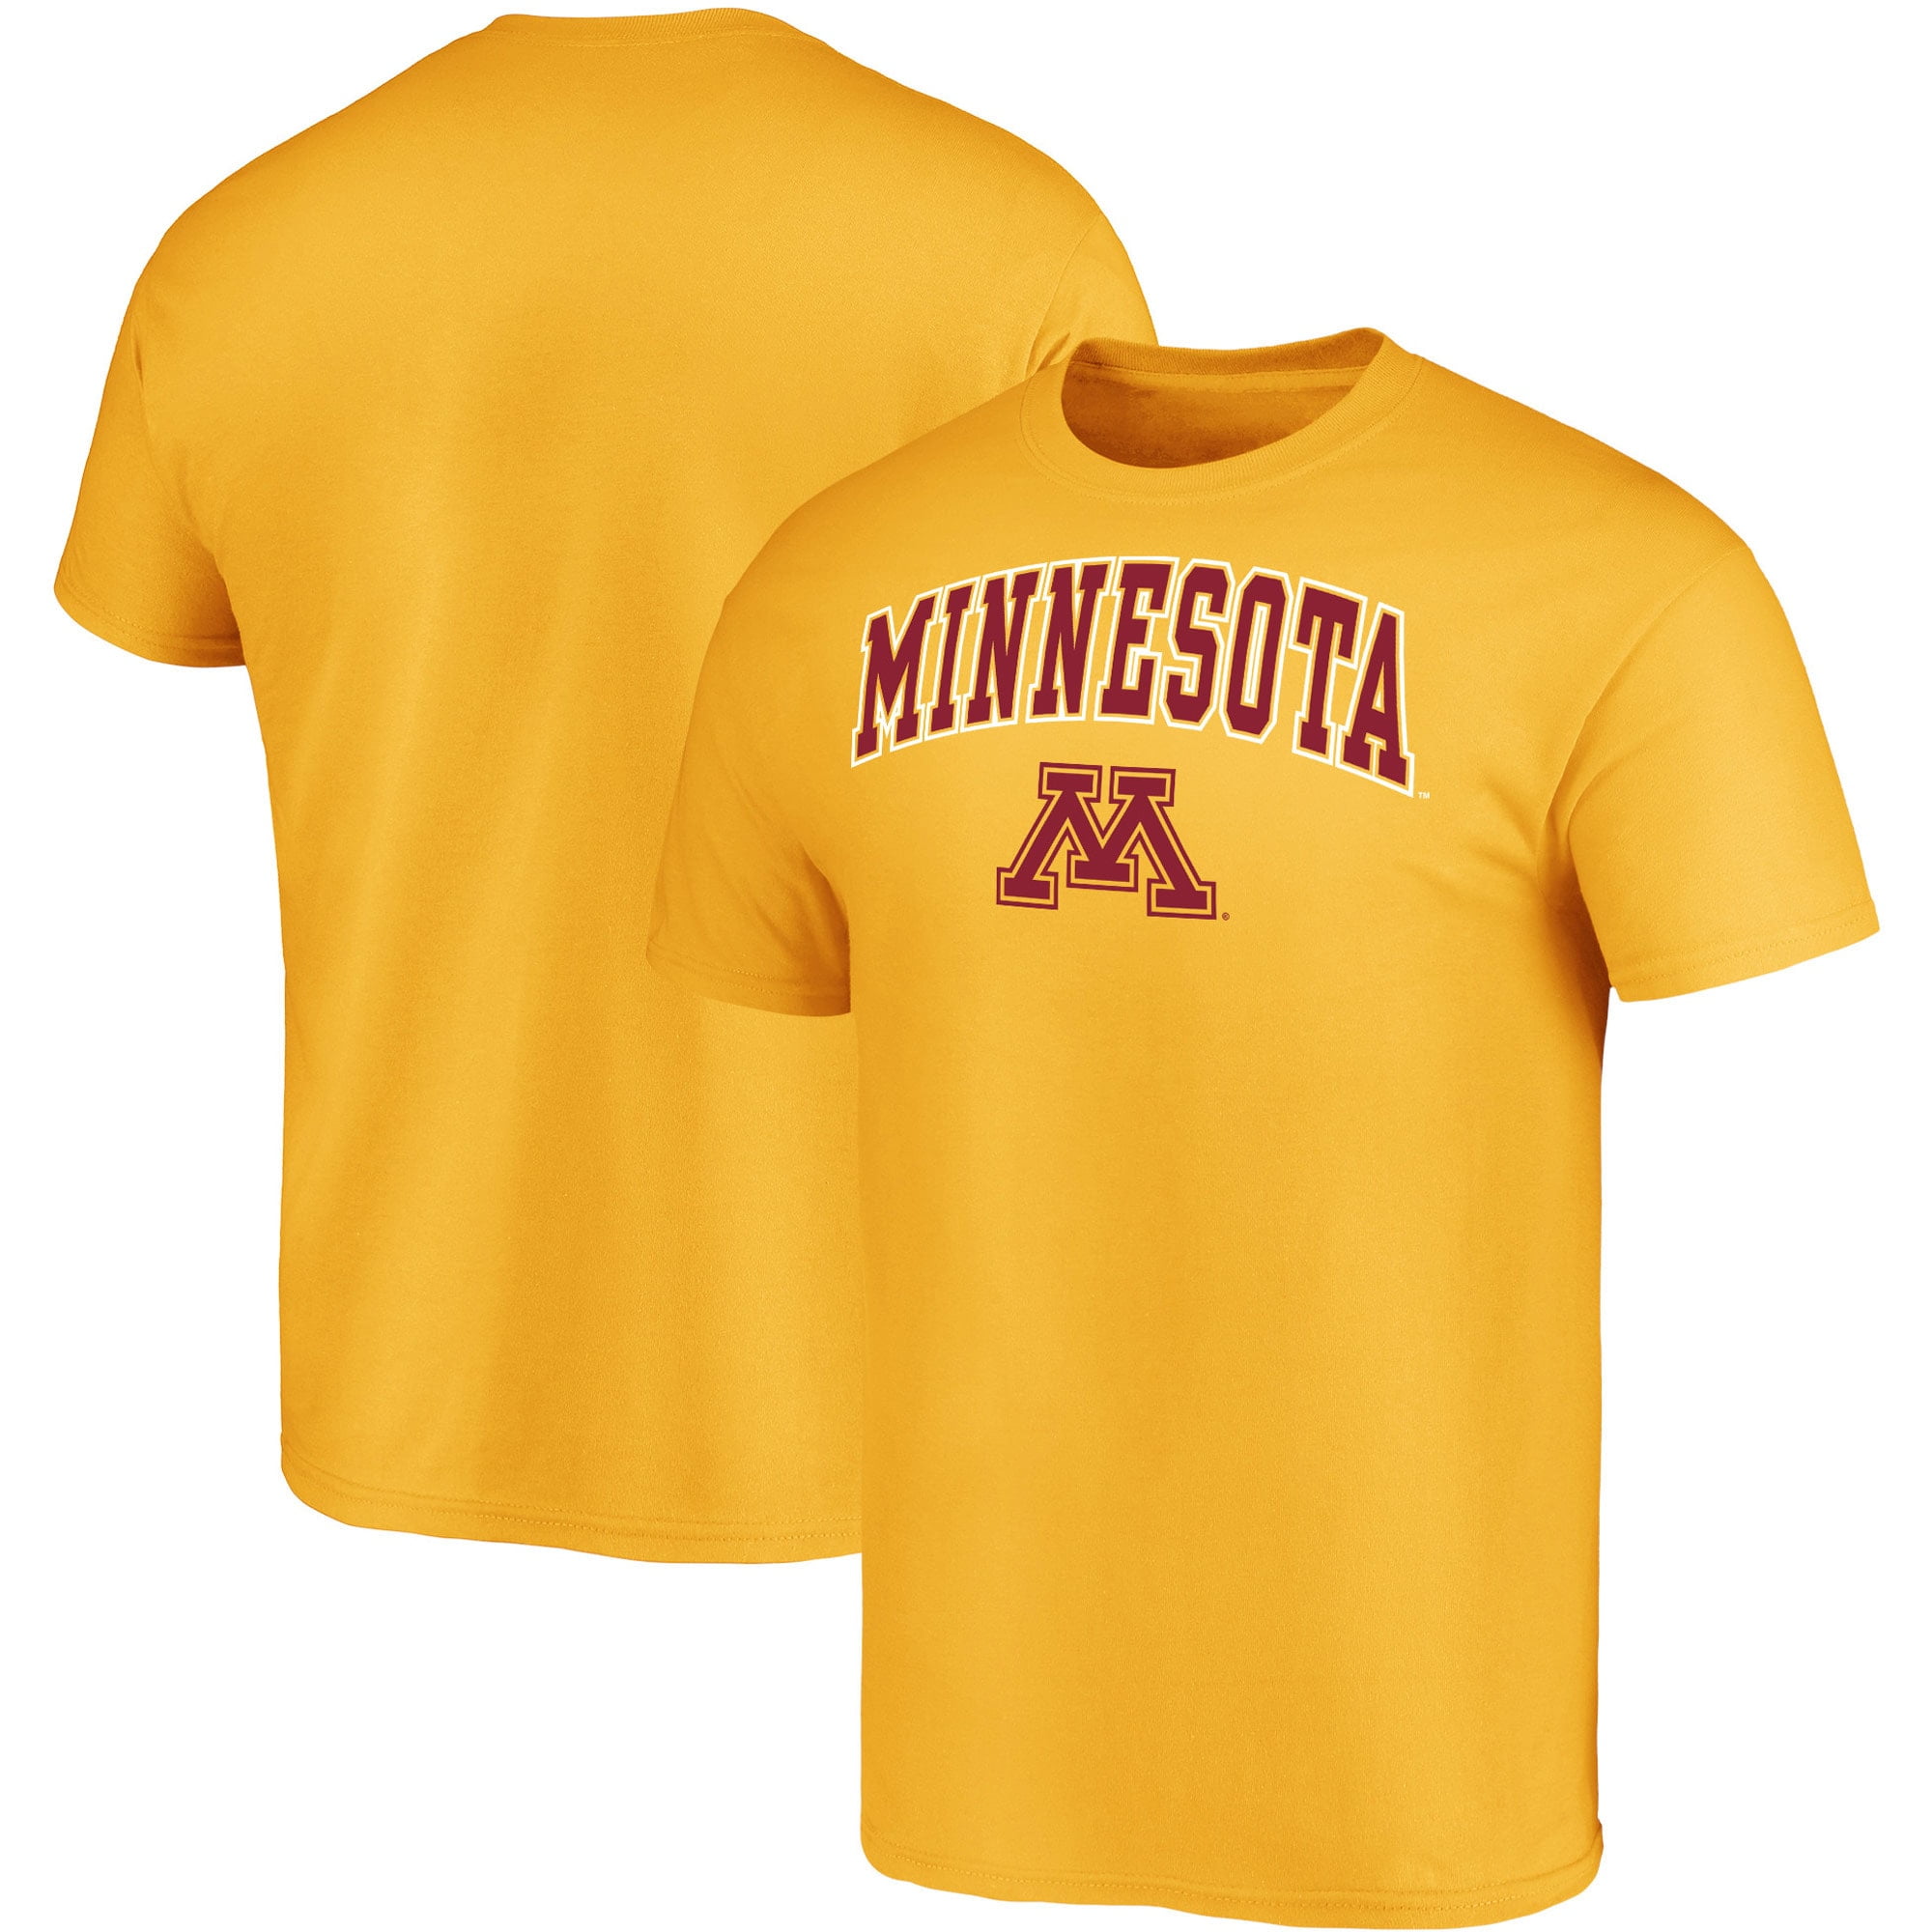 Illinois Illini Men's Medium Orange T-Shirt Guys Fan University Dorm Gift New M 